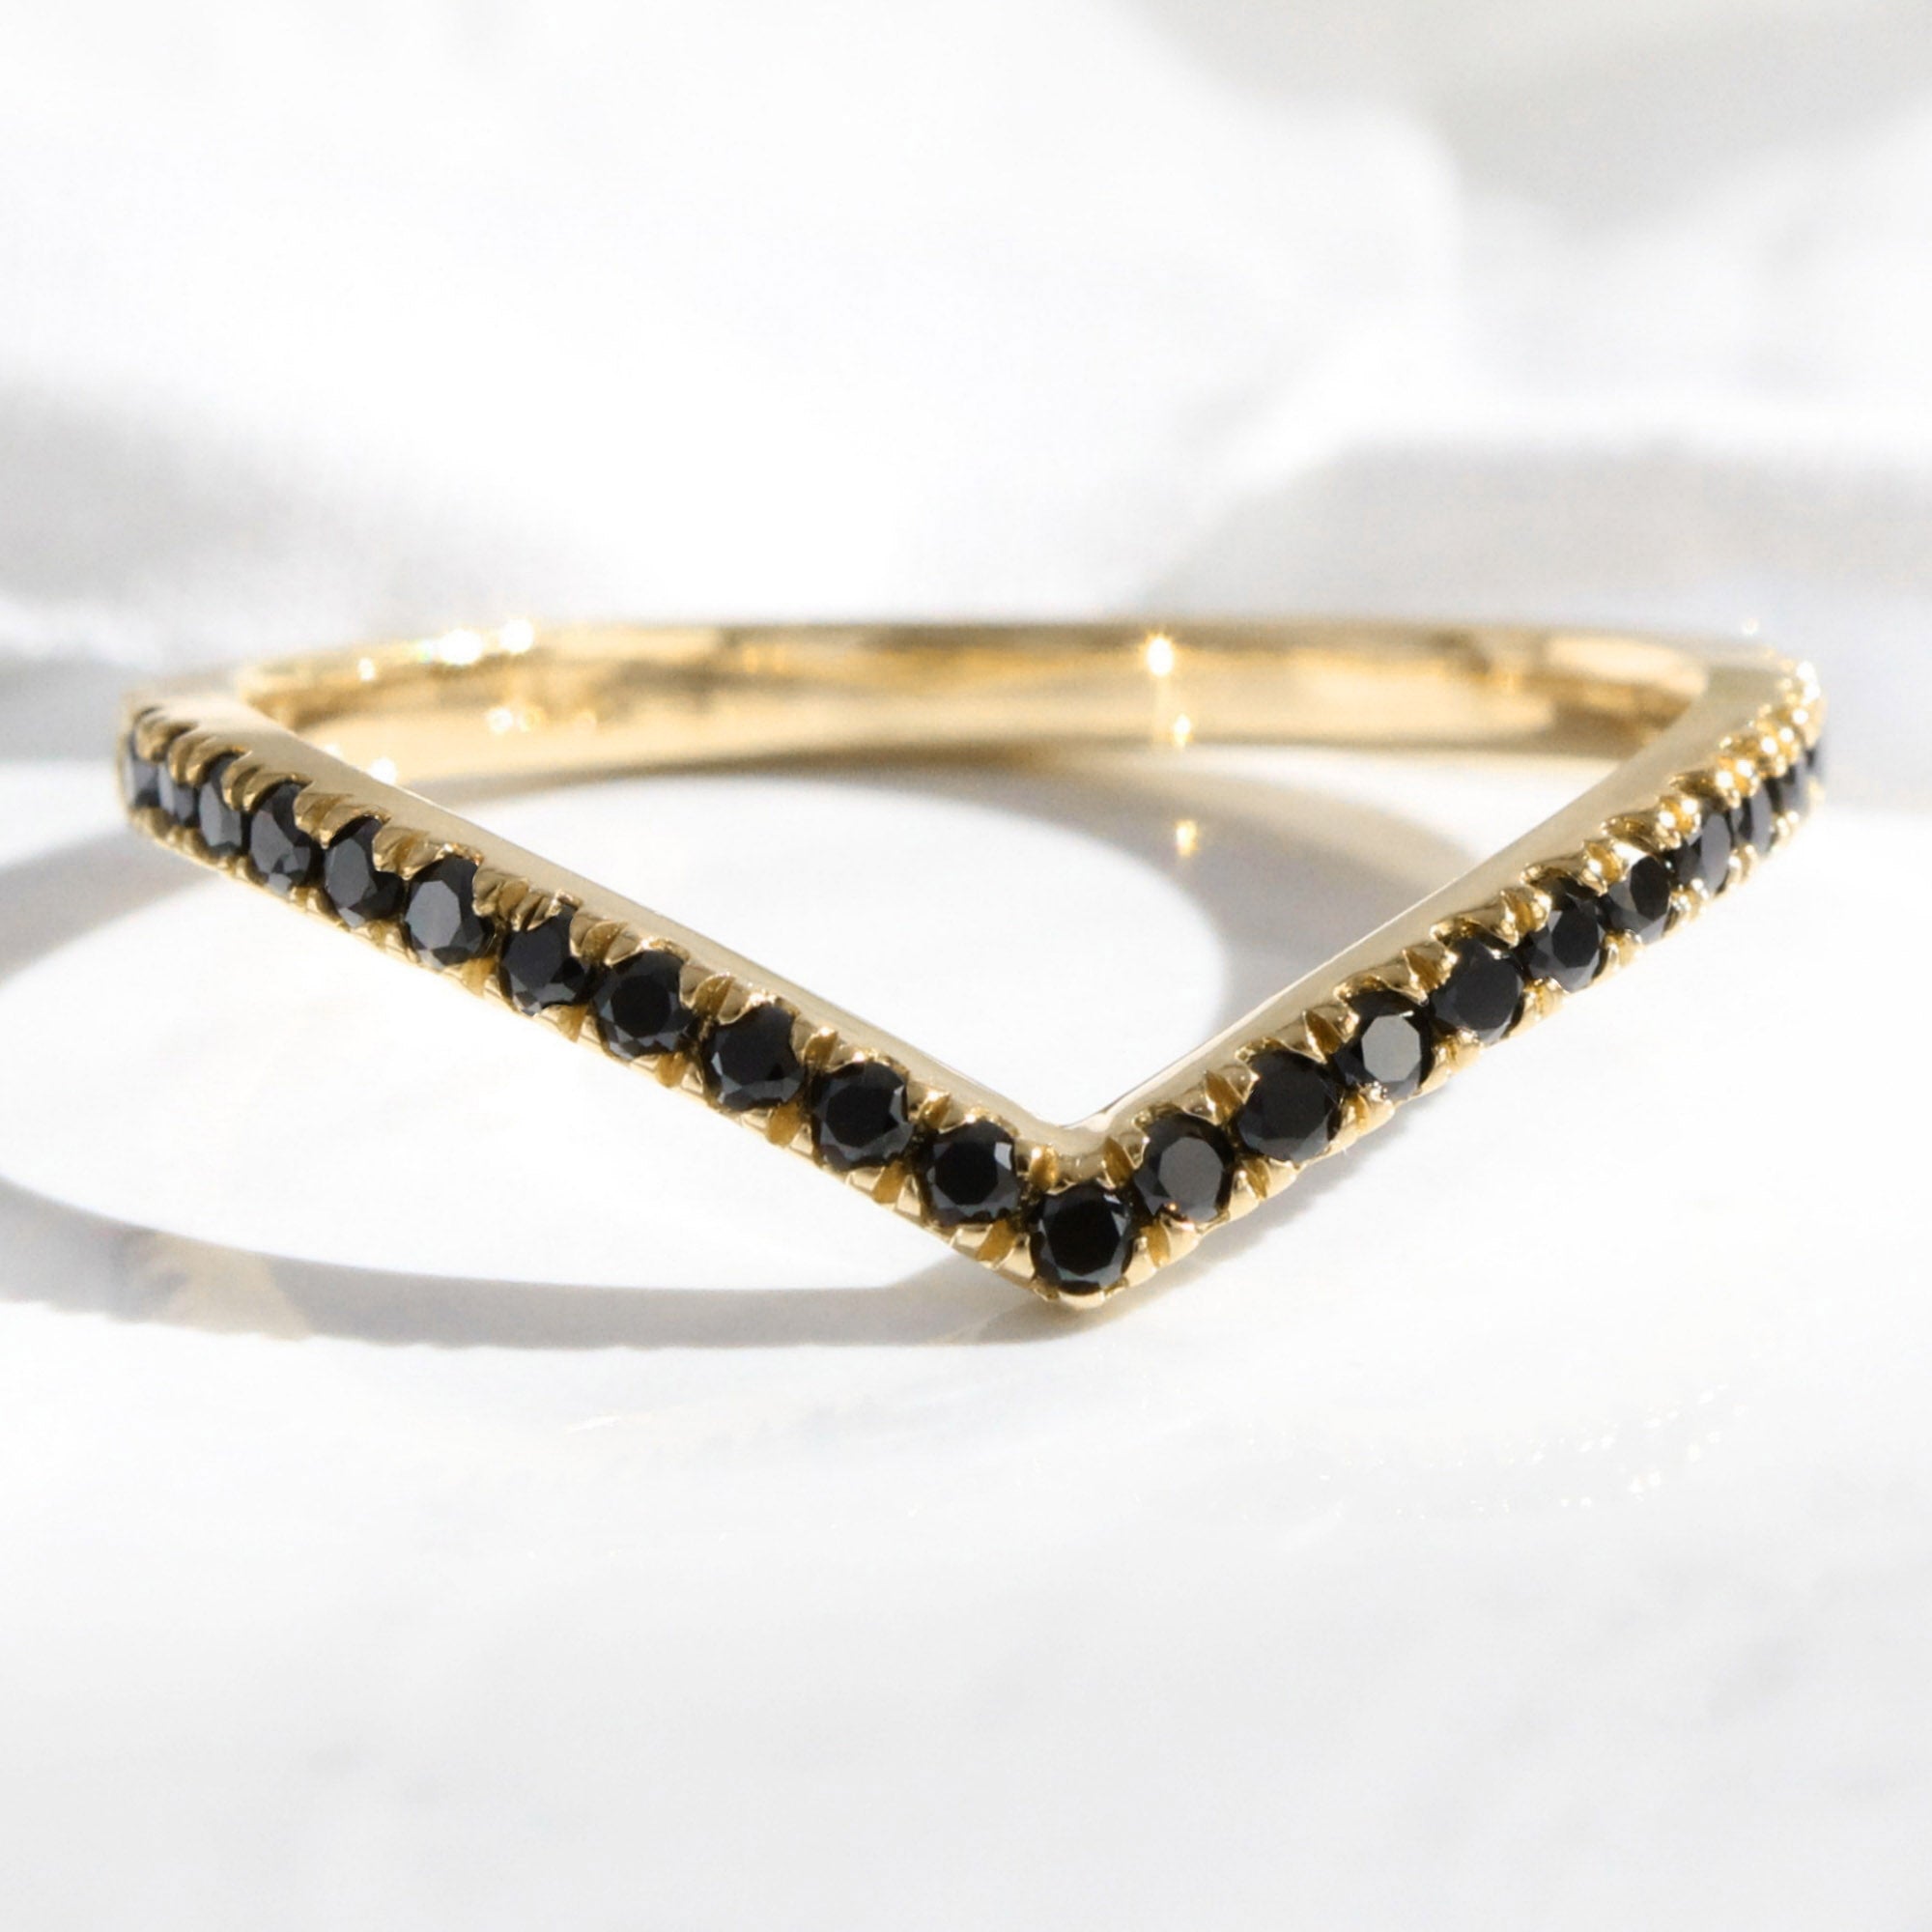 Chevron Black Diamond Wedding Ring yellow Gold V Shaped Curved Pave Band La More Design Jewelry